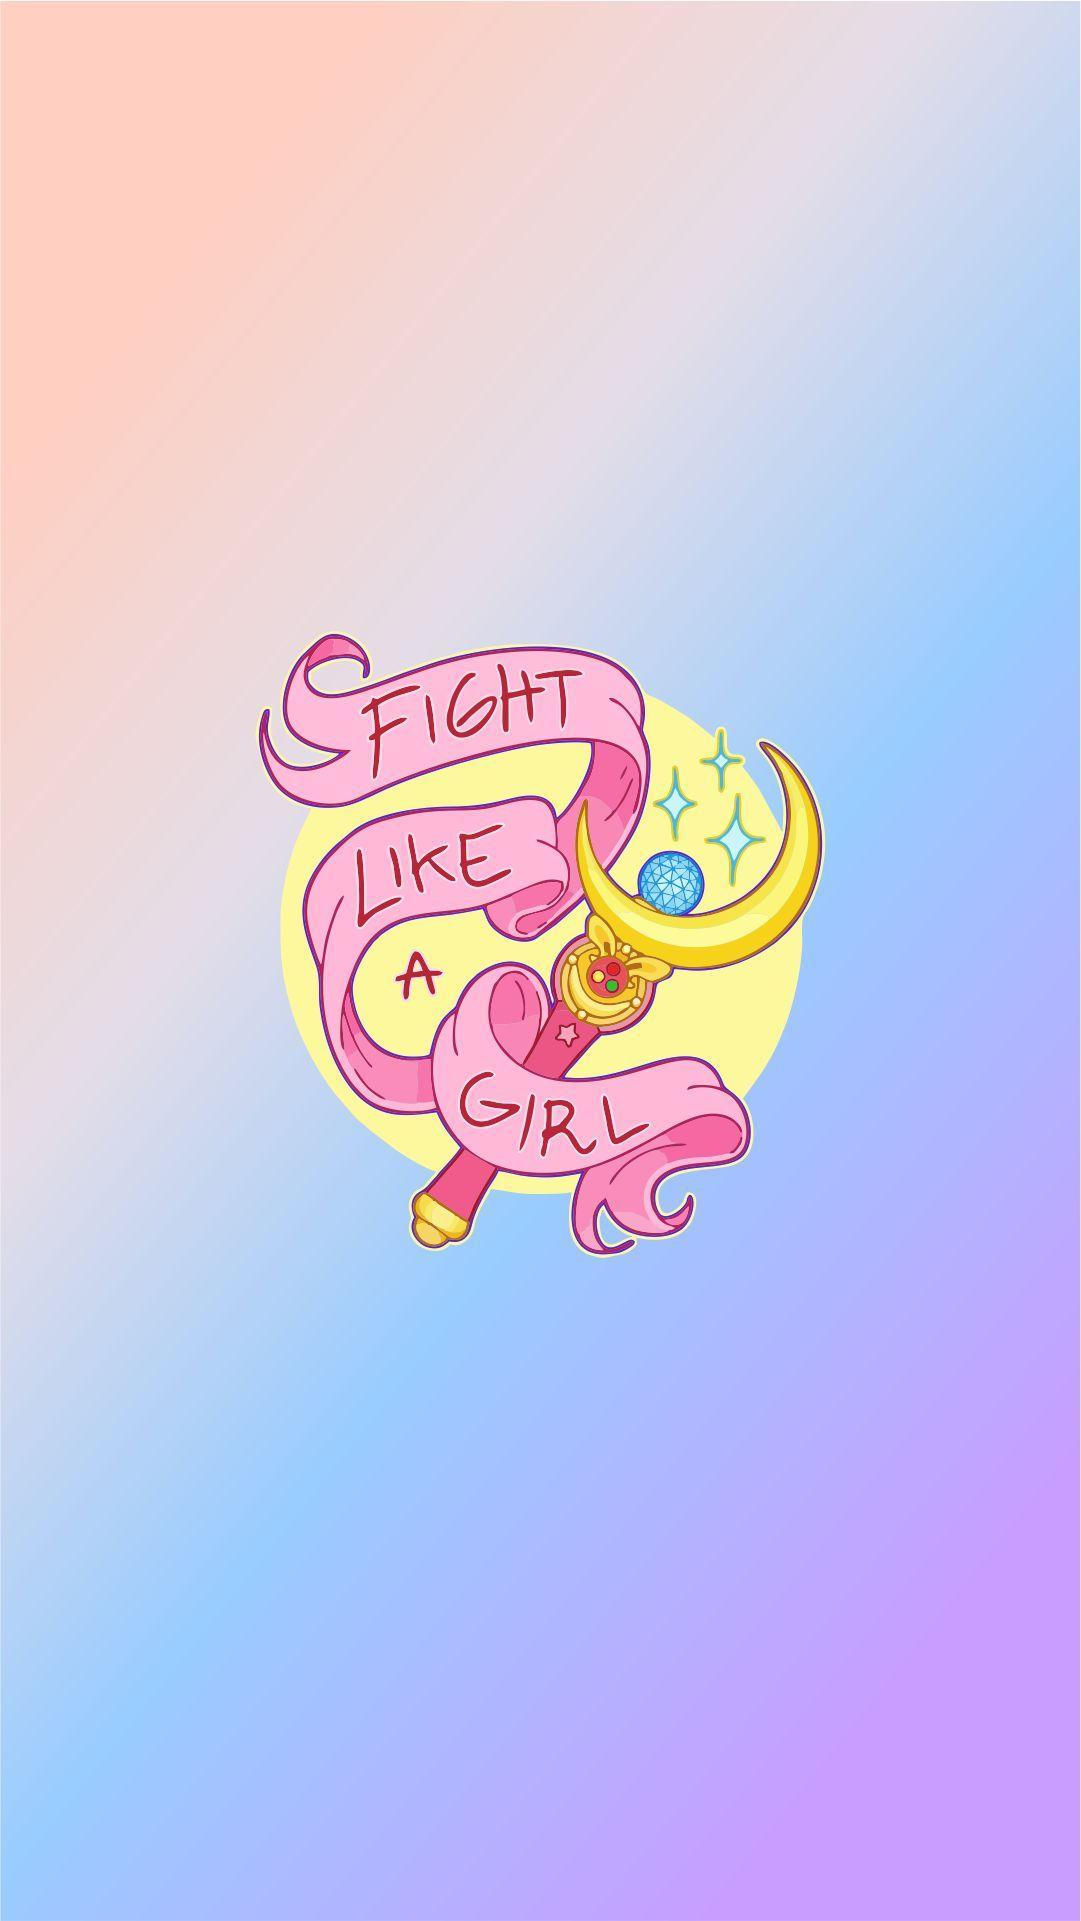 Fight Like a Girl wallpaper. Sailor moon wallpaper, Sailor moon